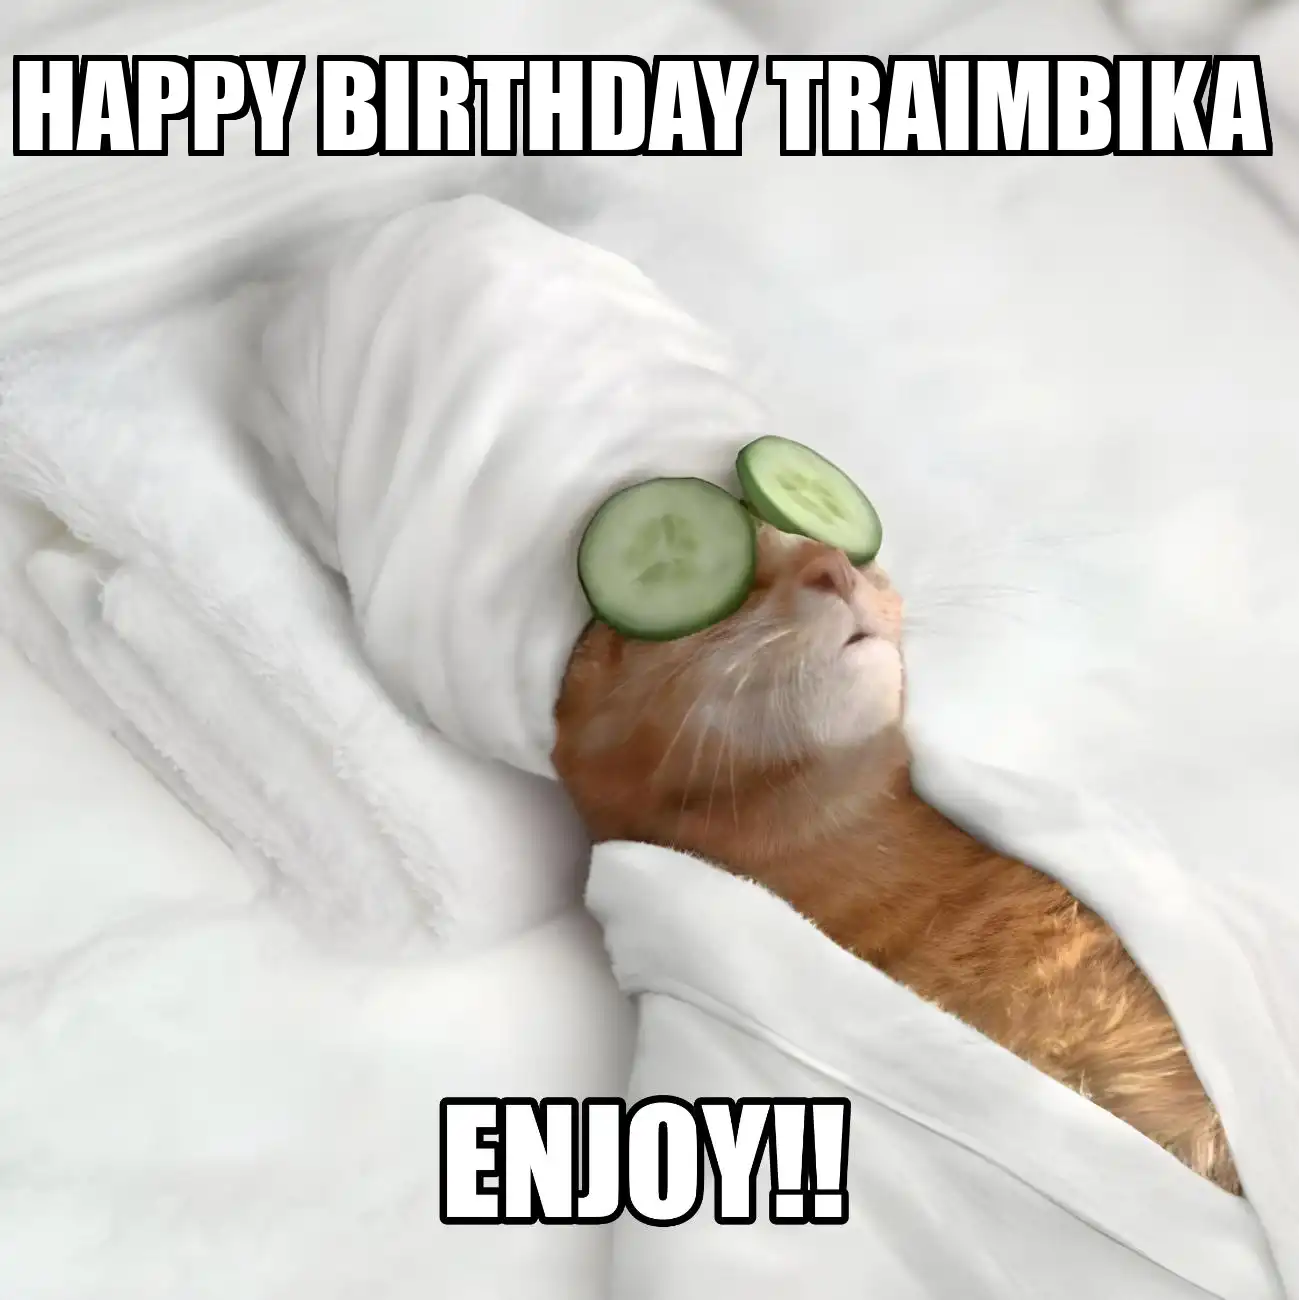 Happy Birthday Traimbika Enjoy Cat Meme